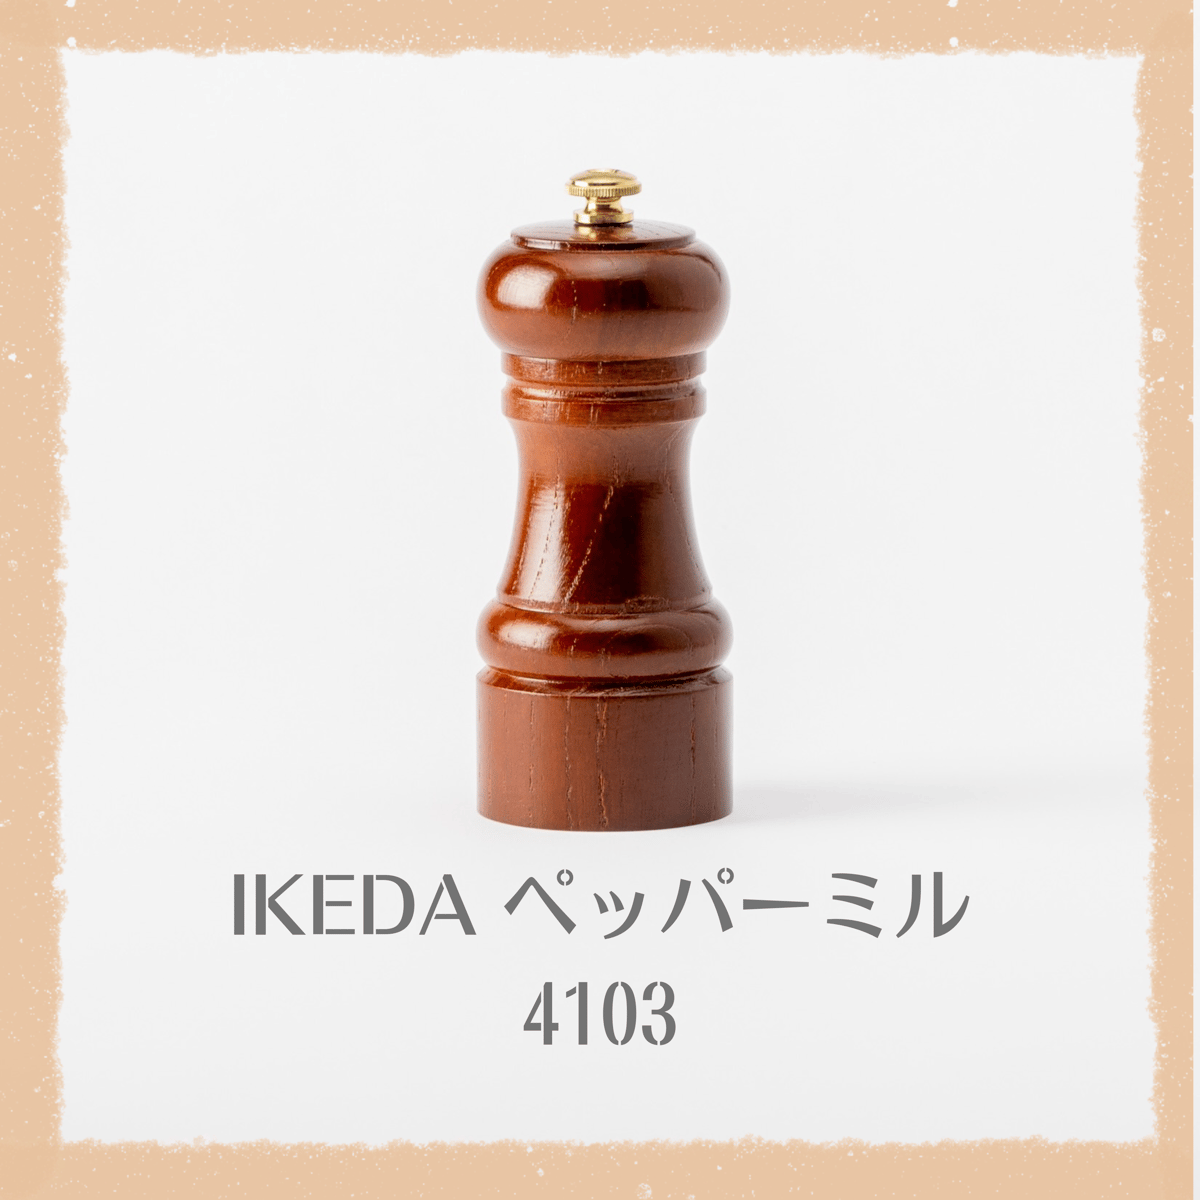 IKEDA / ペッパーミル 4103 | KURATA PEPPER